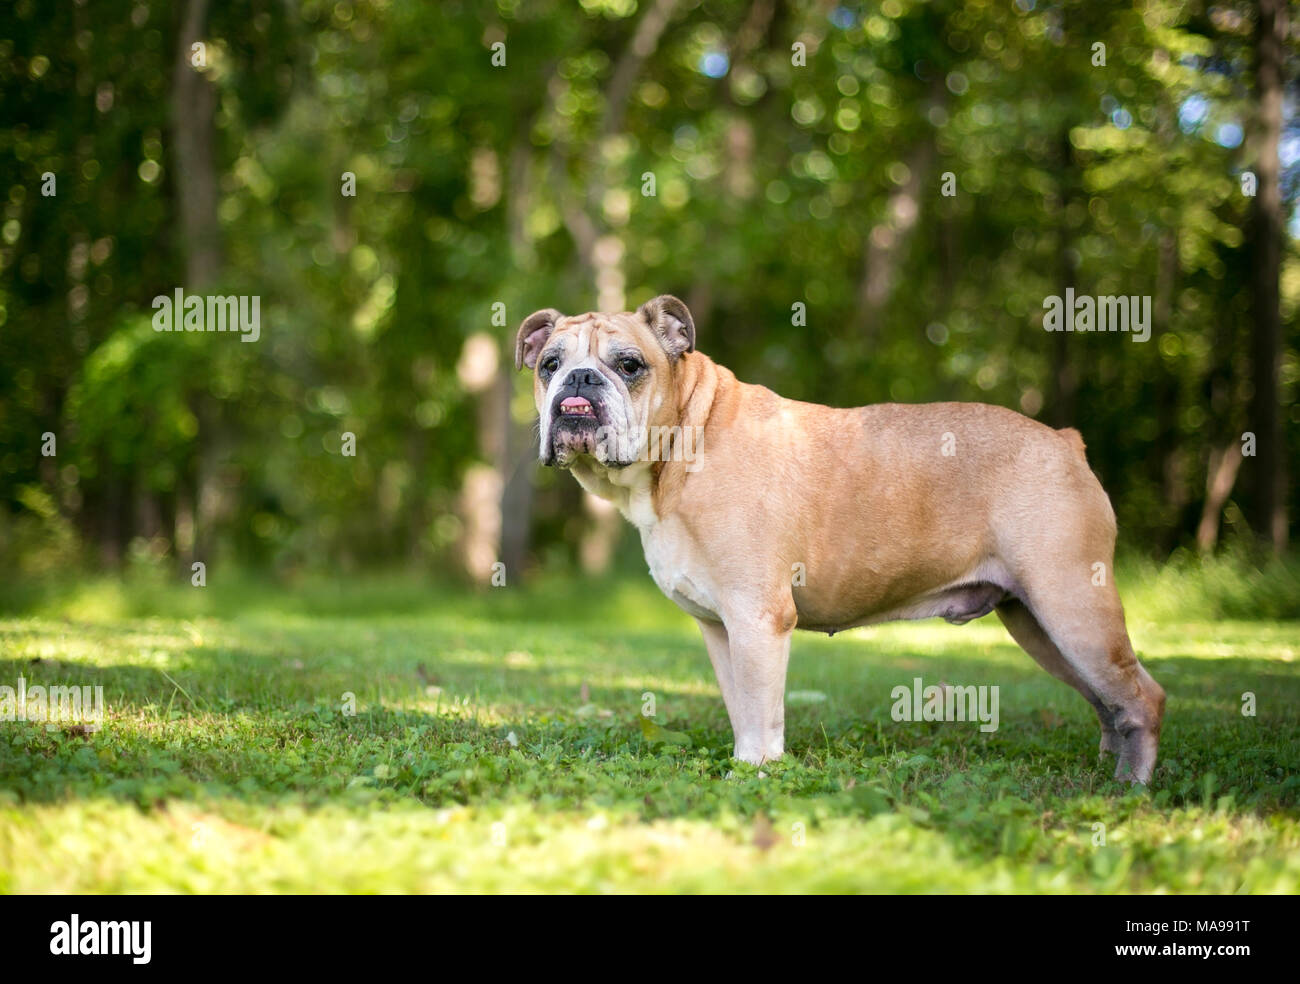 An English Bulldog with an underbite outdoors Stock Photo